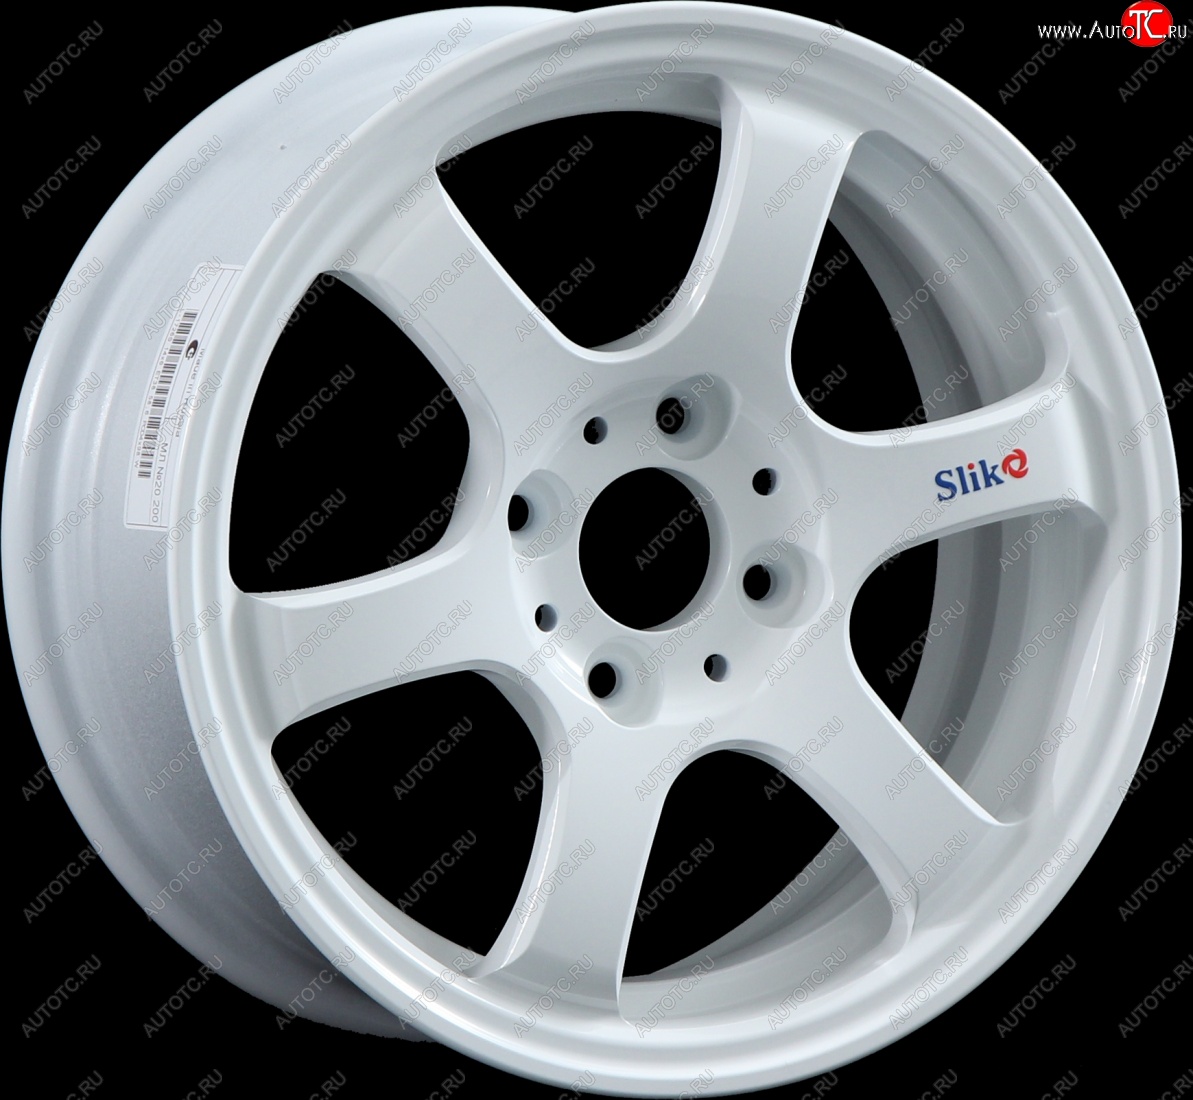 5 999 р. Кованый диск Slik Classik 5.5x14 (Белый W) Honda Fit 2 GE 2-ой рестайлинг (2012-2014) 4x100.0xDIA56.1xET45.0 (Цвет: Белый W)